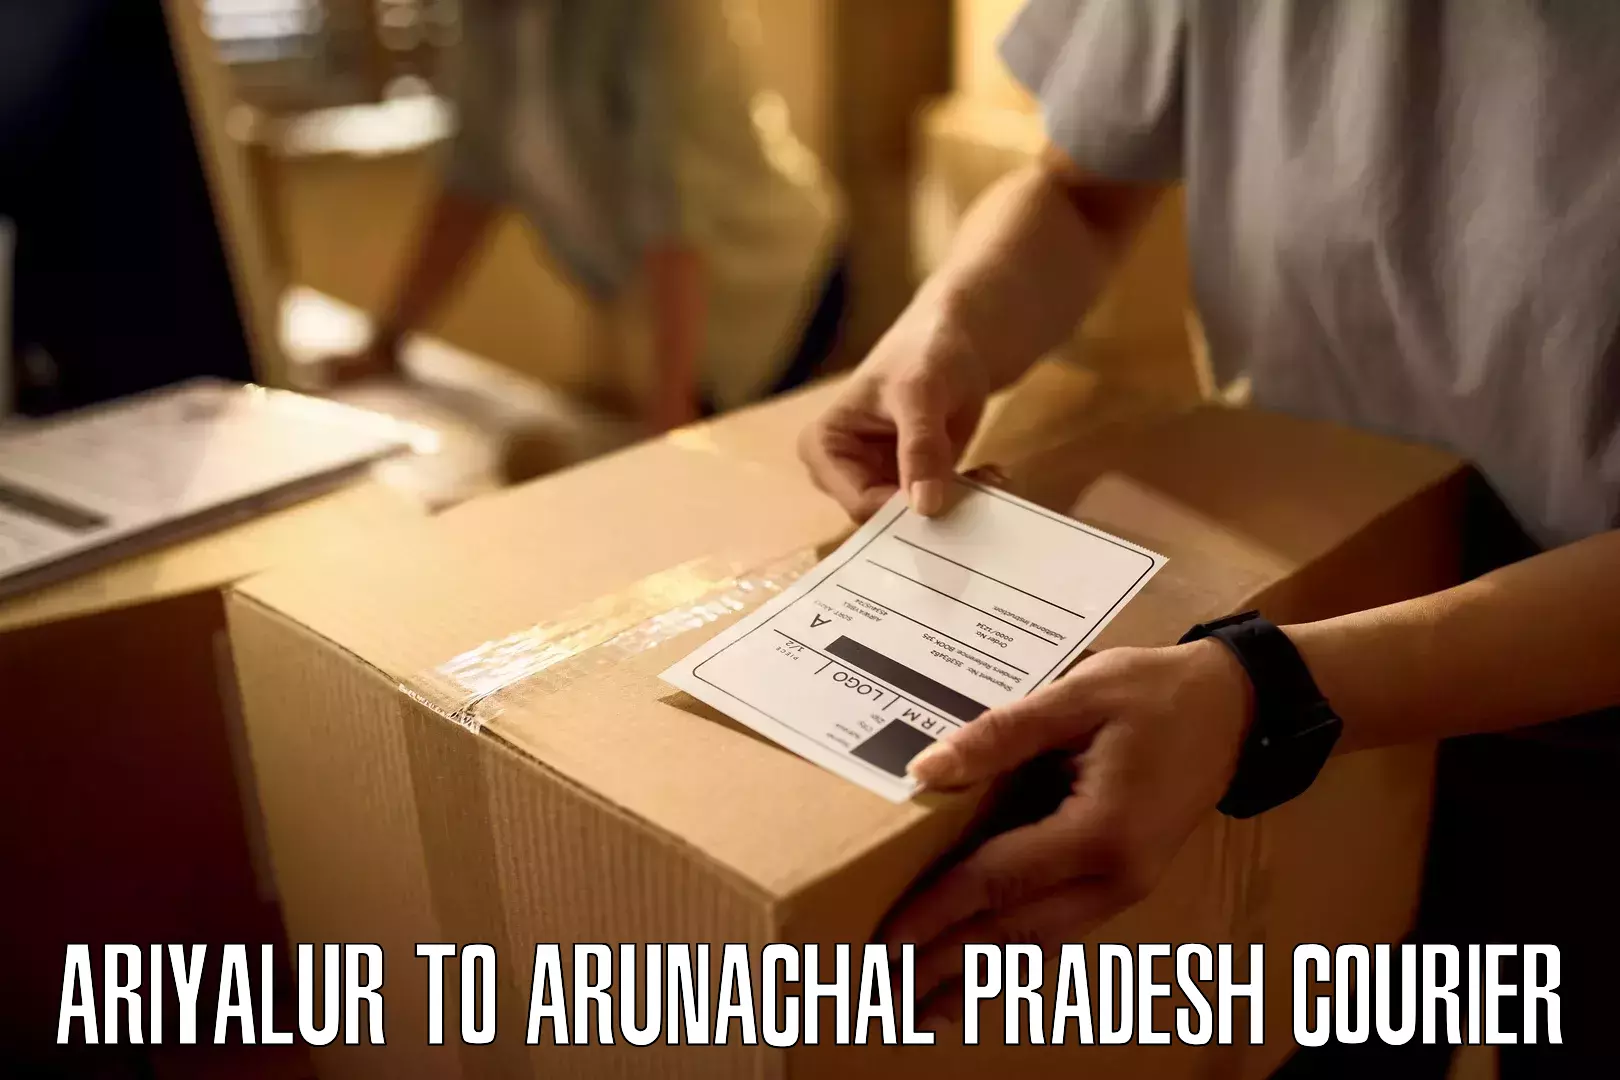 Nationwide delivery network Ariyalur to Arunachal Pradesh